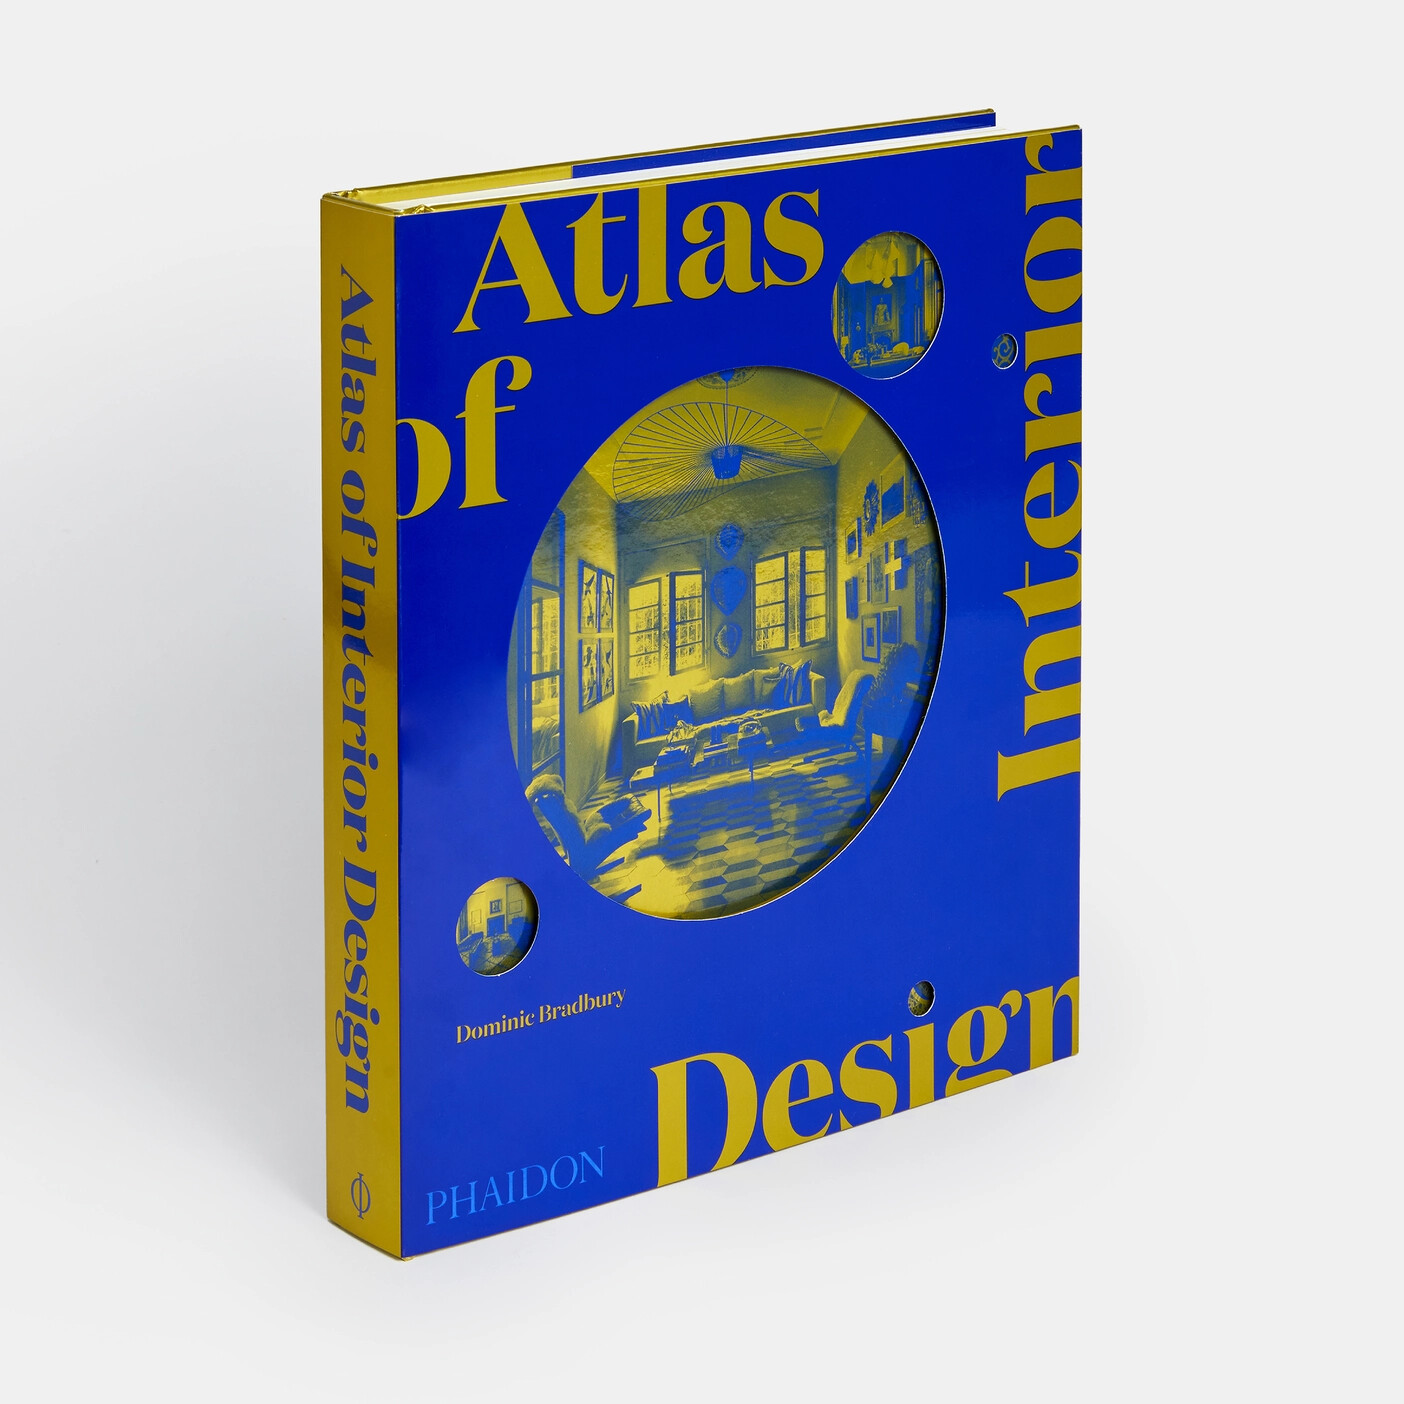 Phaidon - Atlas of Interior Design:
Dominic Bradbury